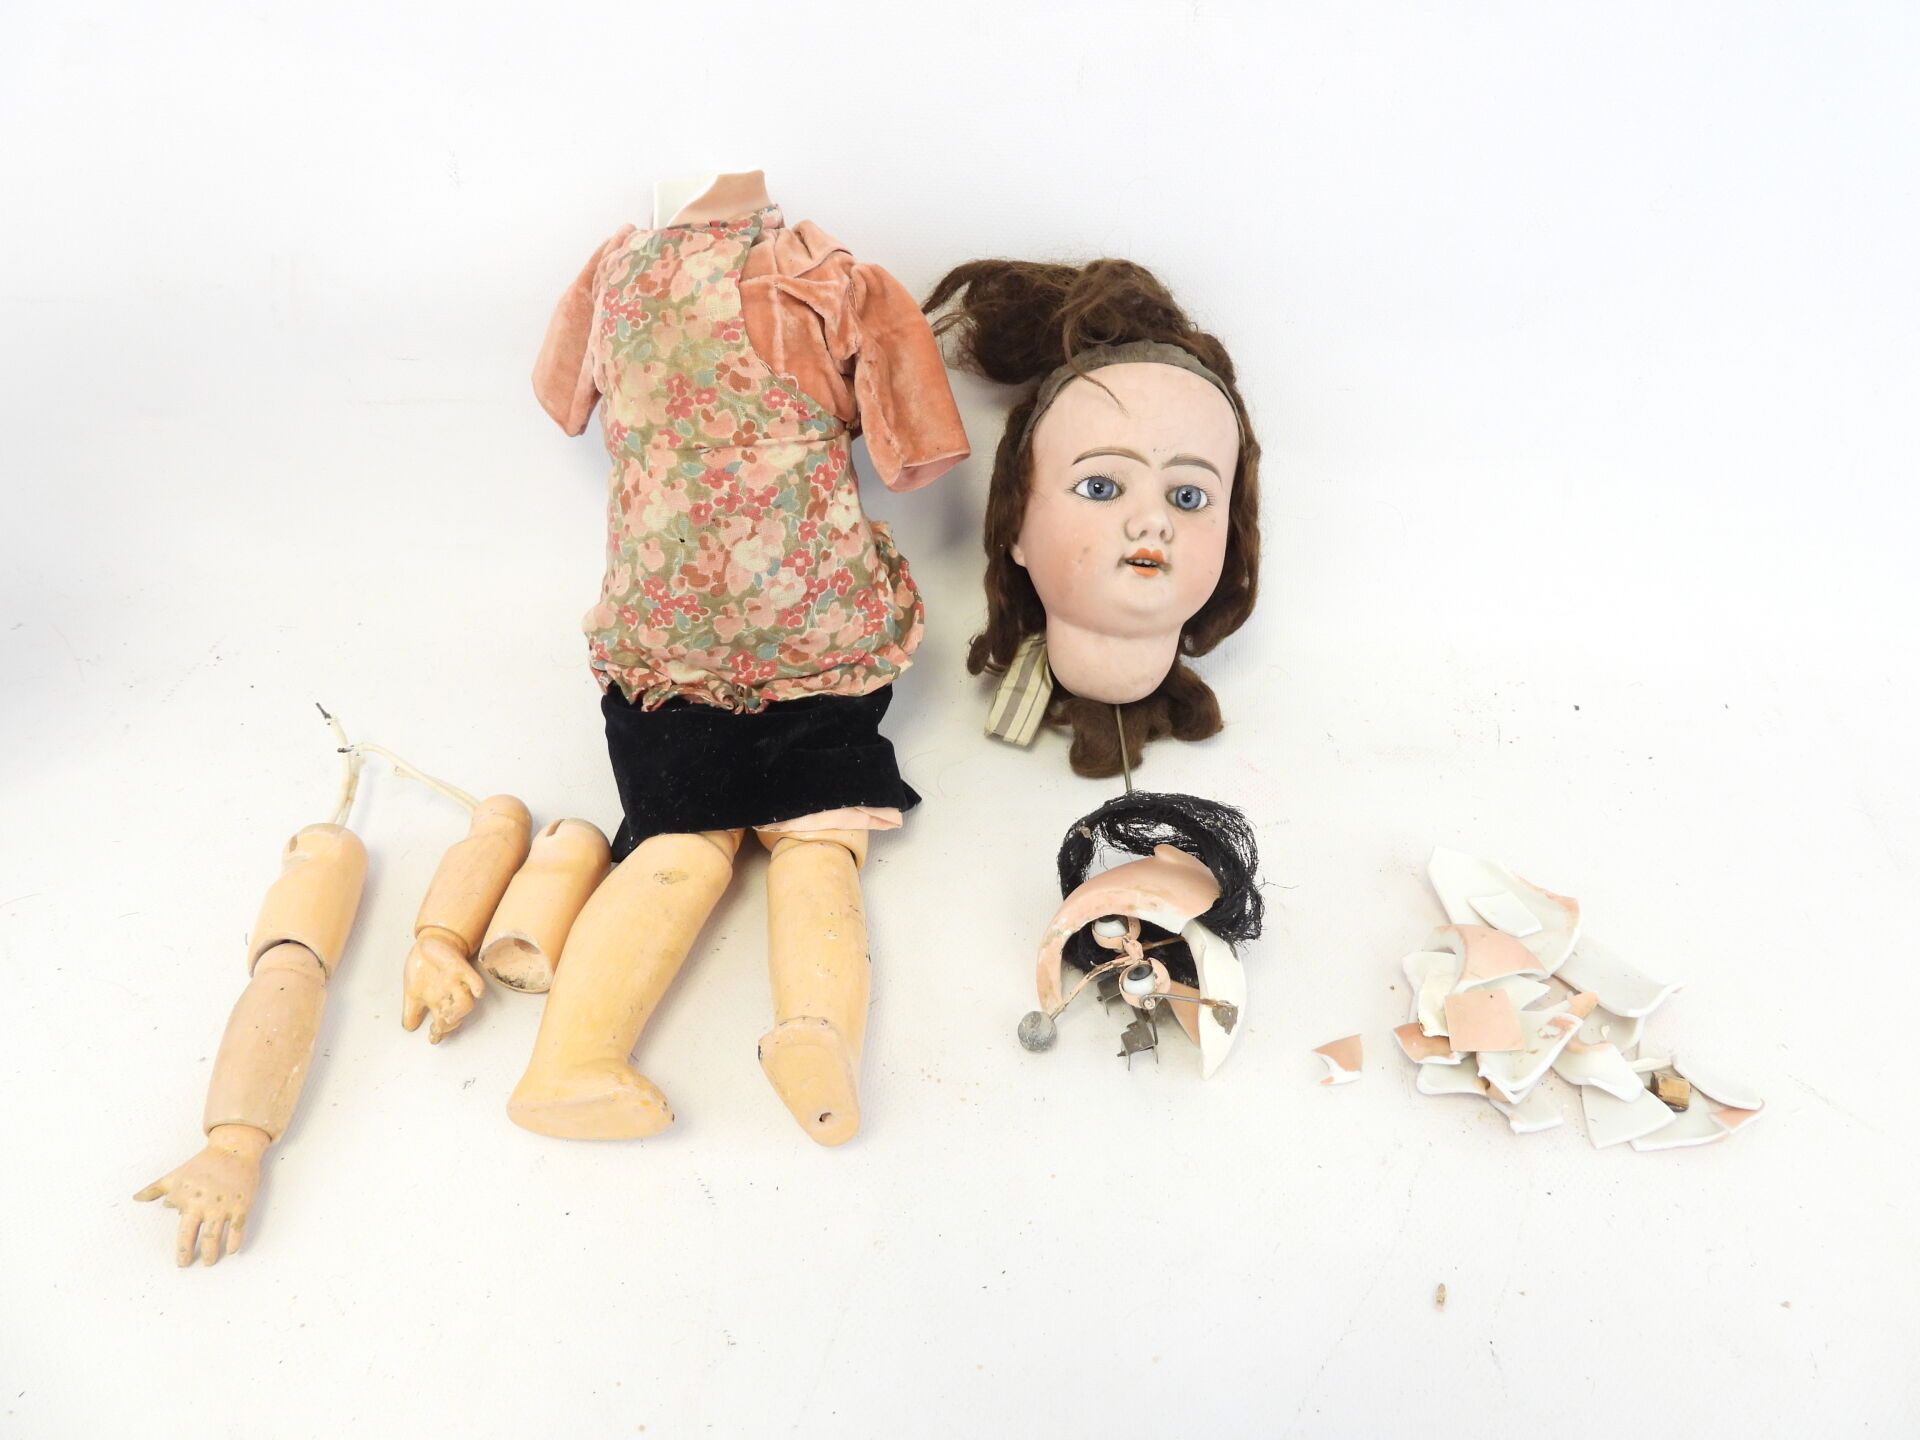 Null 包括一个娃娃的一部分，头部是仿制的，眼睛是固定的，嘴巴是张开的。重要事故

娃娃头的一部分和很多衣服都是连在一起的。